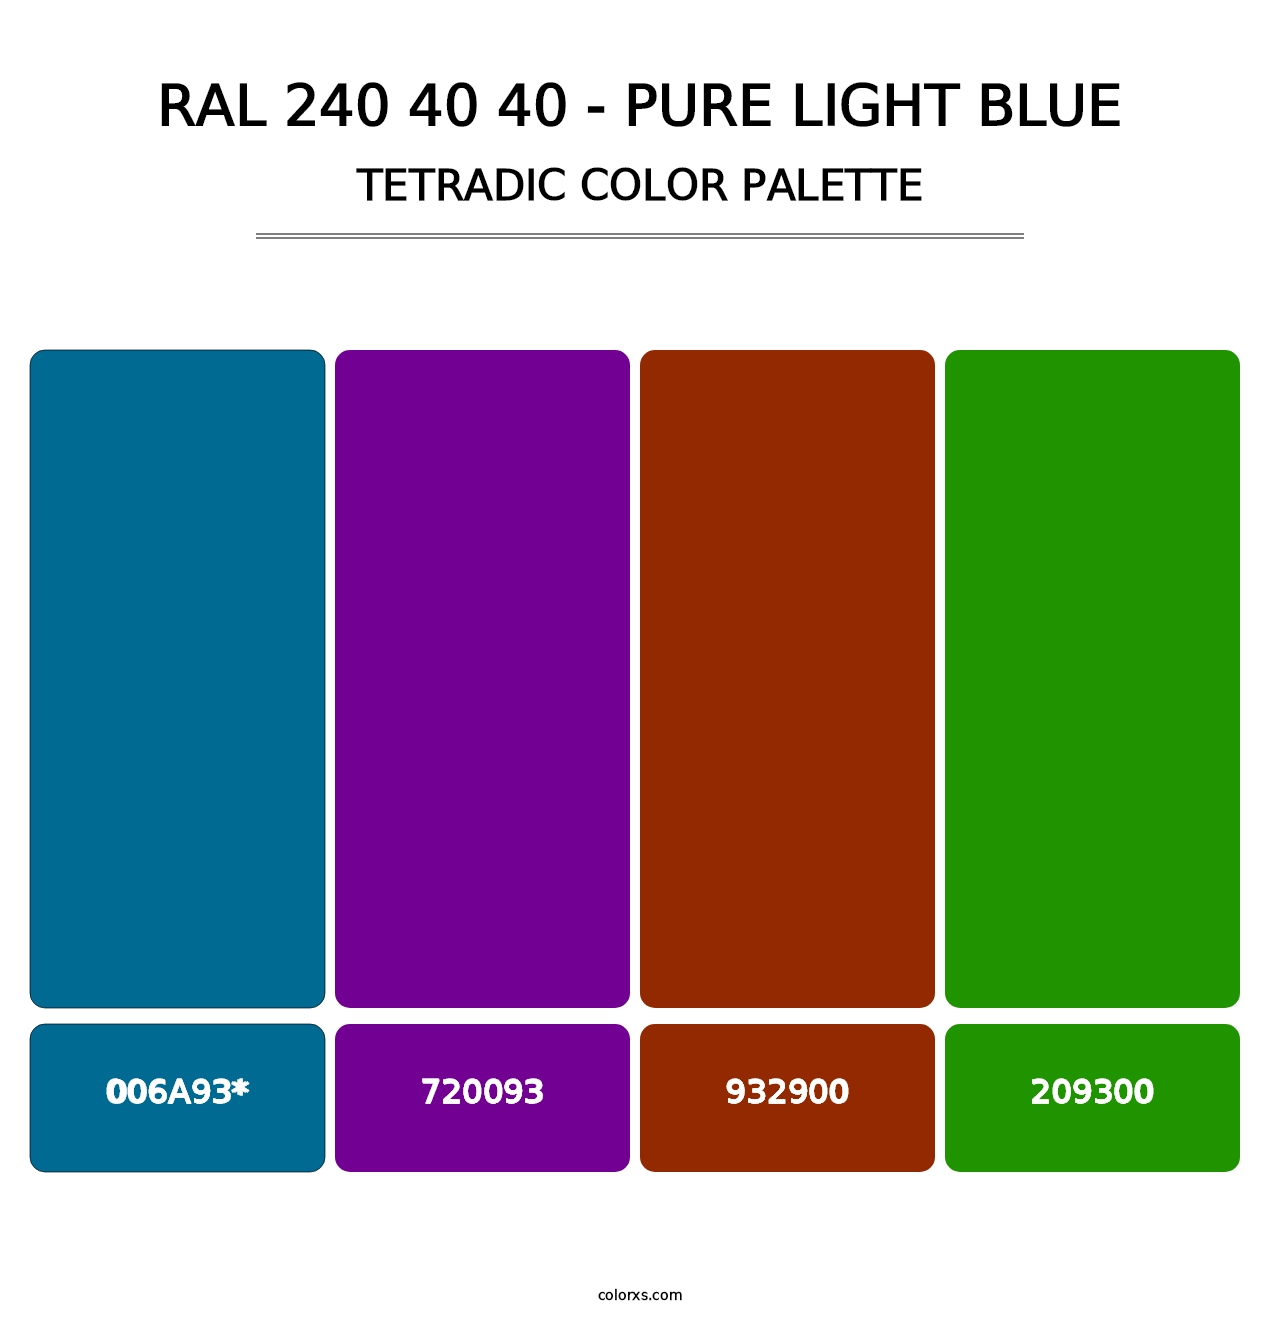 RAL 240 40 40 - Pure Light Blue - Tetradic Color Palette